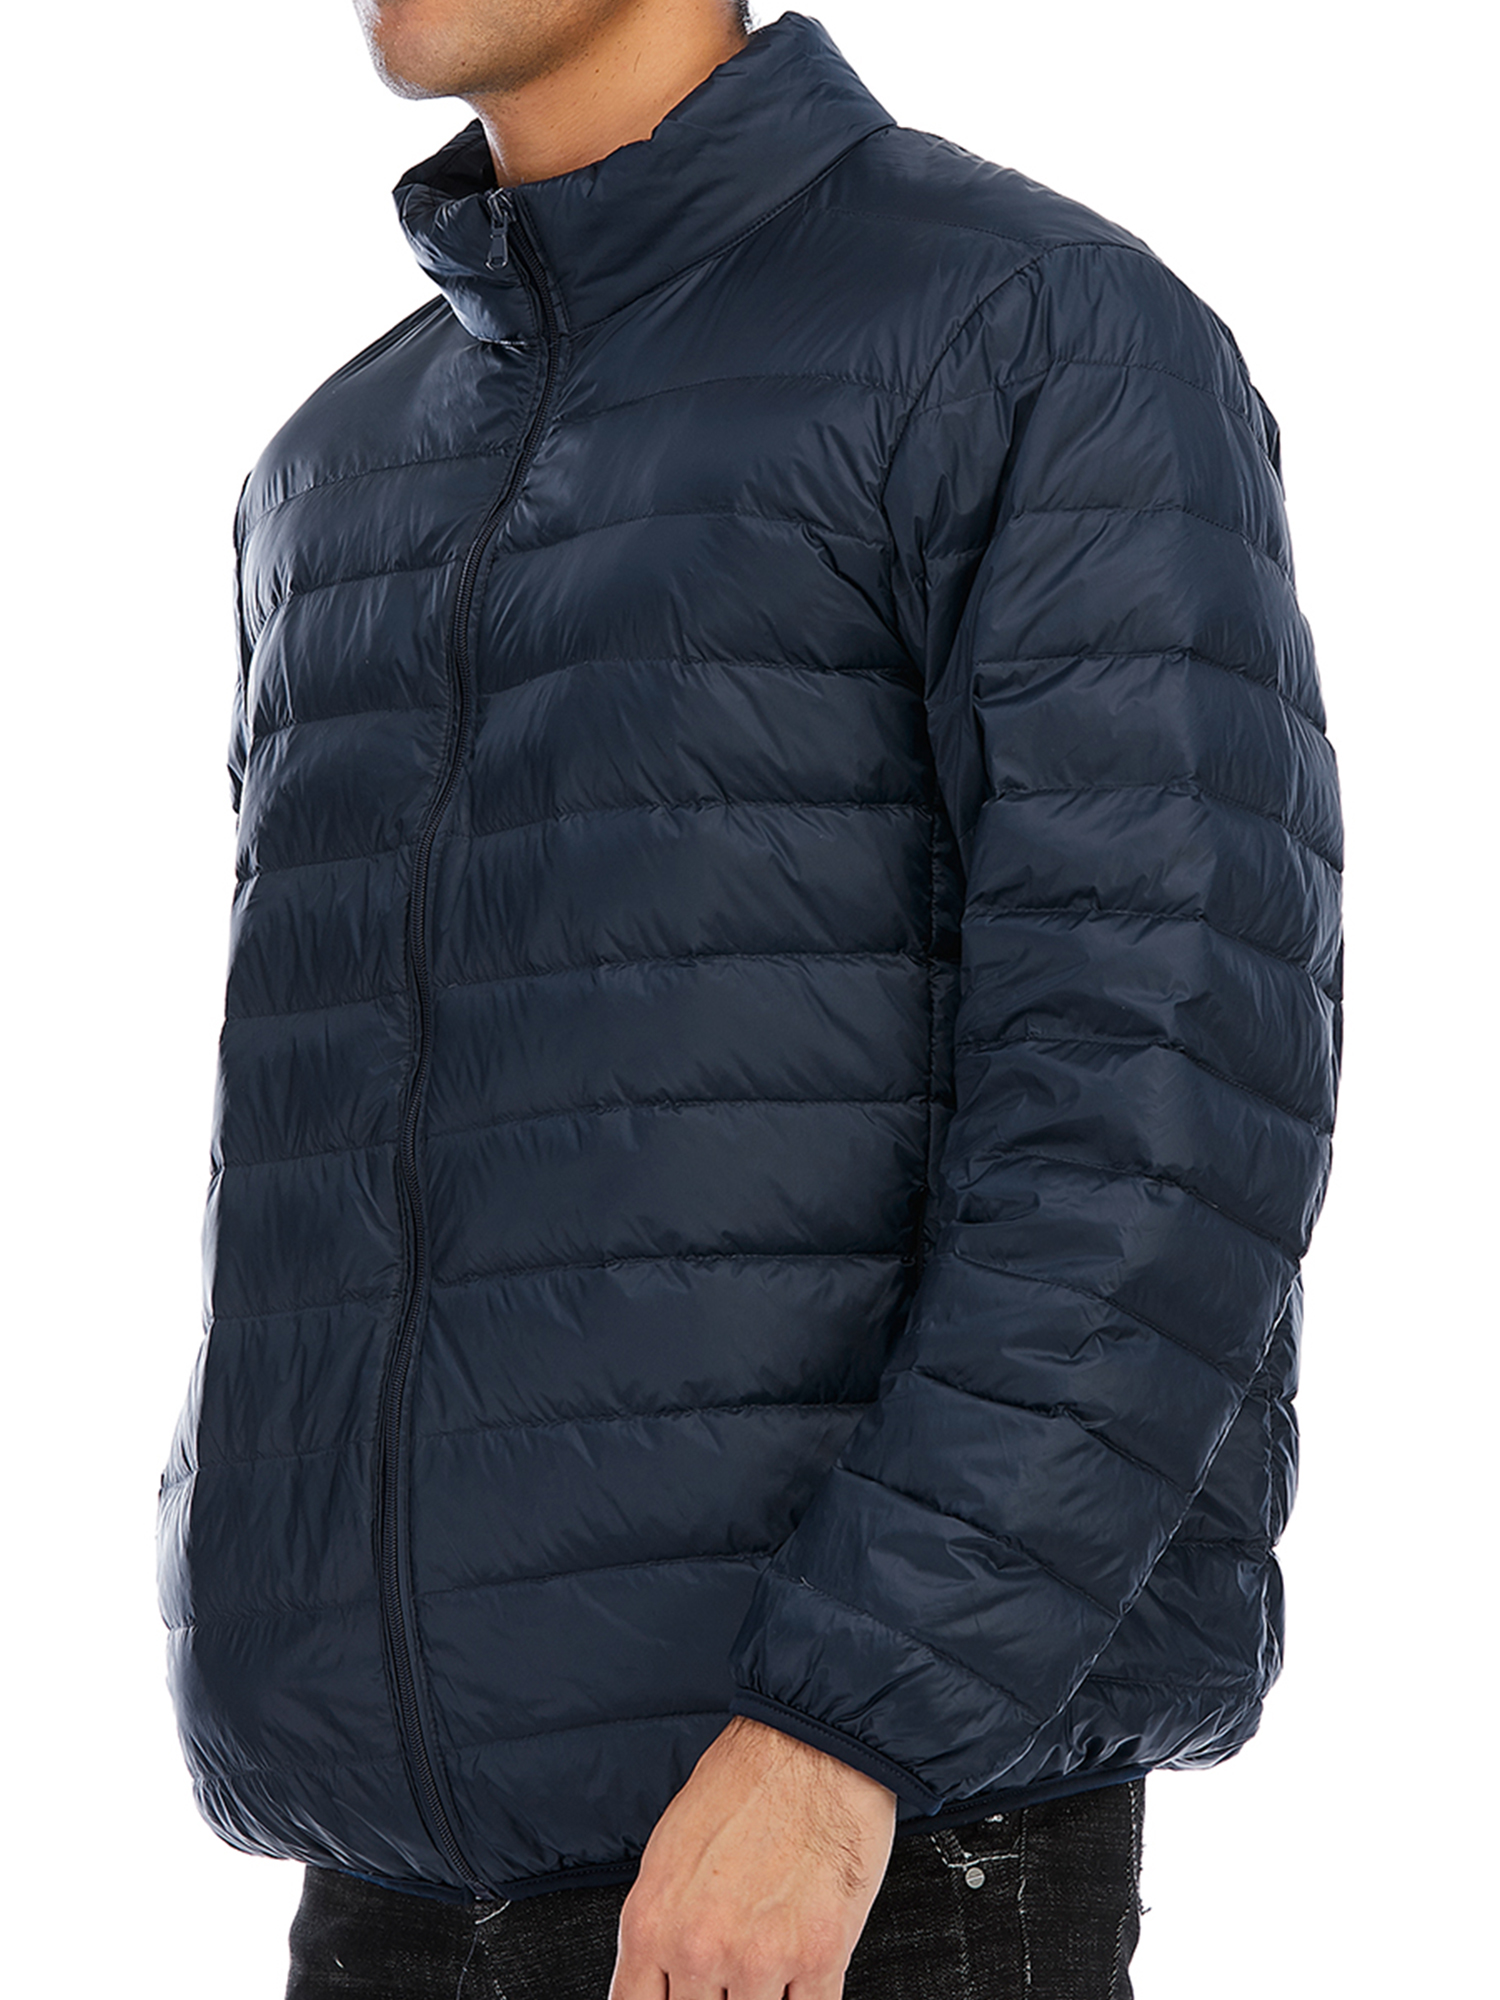 FOCUSSEXY Mens Down Puffer Jacket Lightweight Packable Winter Coat Men's Down Puffer Jacket Warm Casual Outdoor Zipper Jacket Packable Puffer Jacket, Blue - image 5 of 7